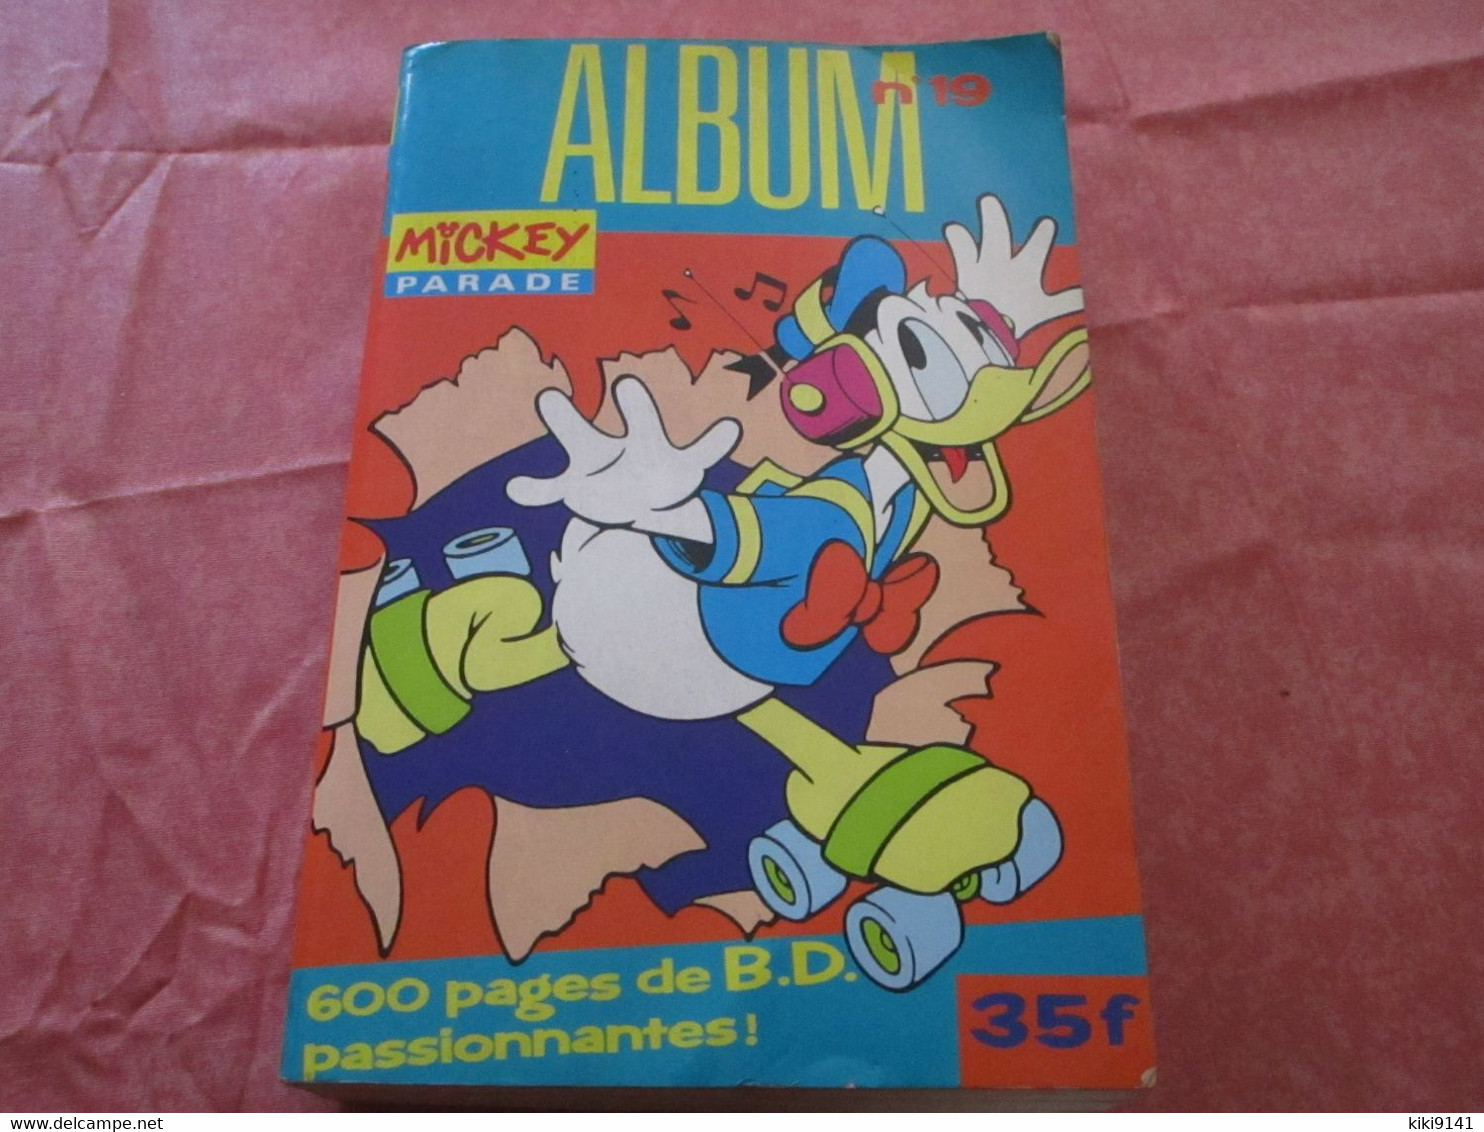 ALBUM N°19 - 600 Pages De B.D. Passionnantes - Mickey Parade